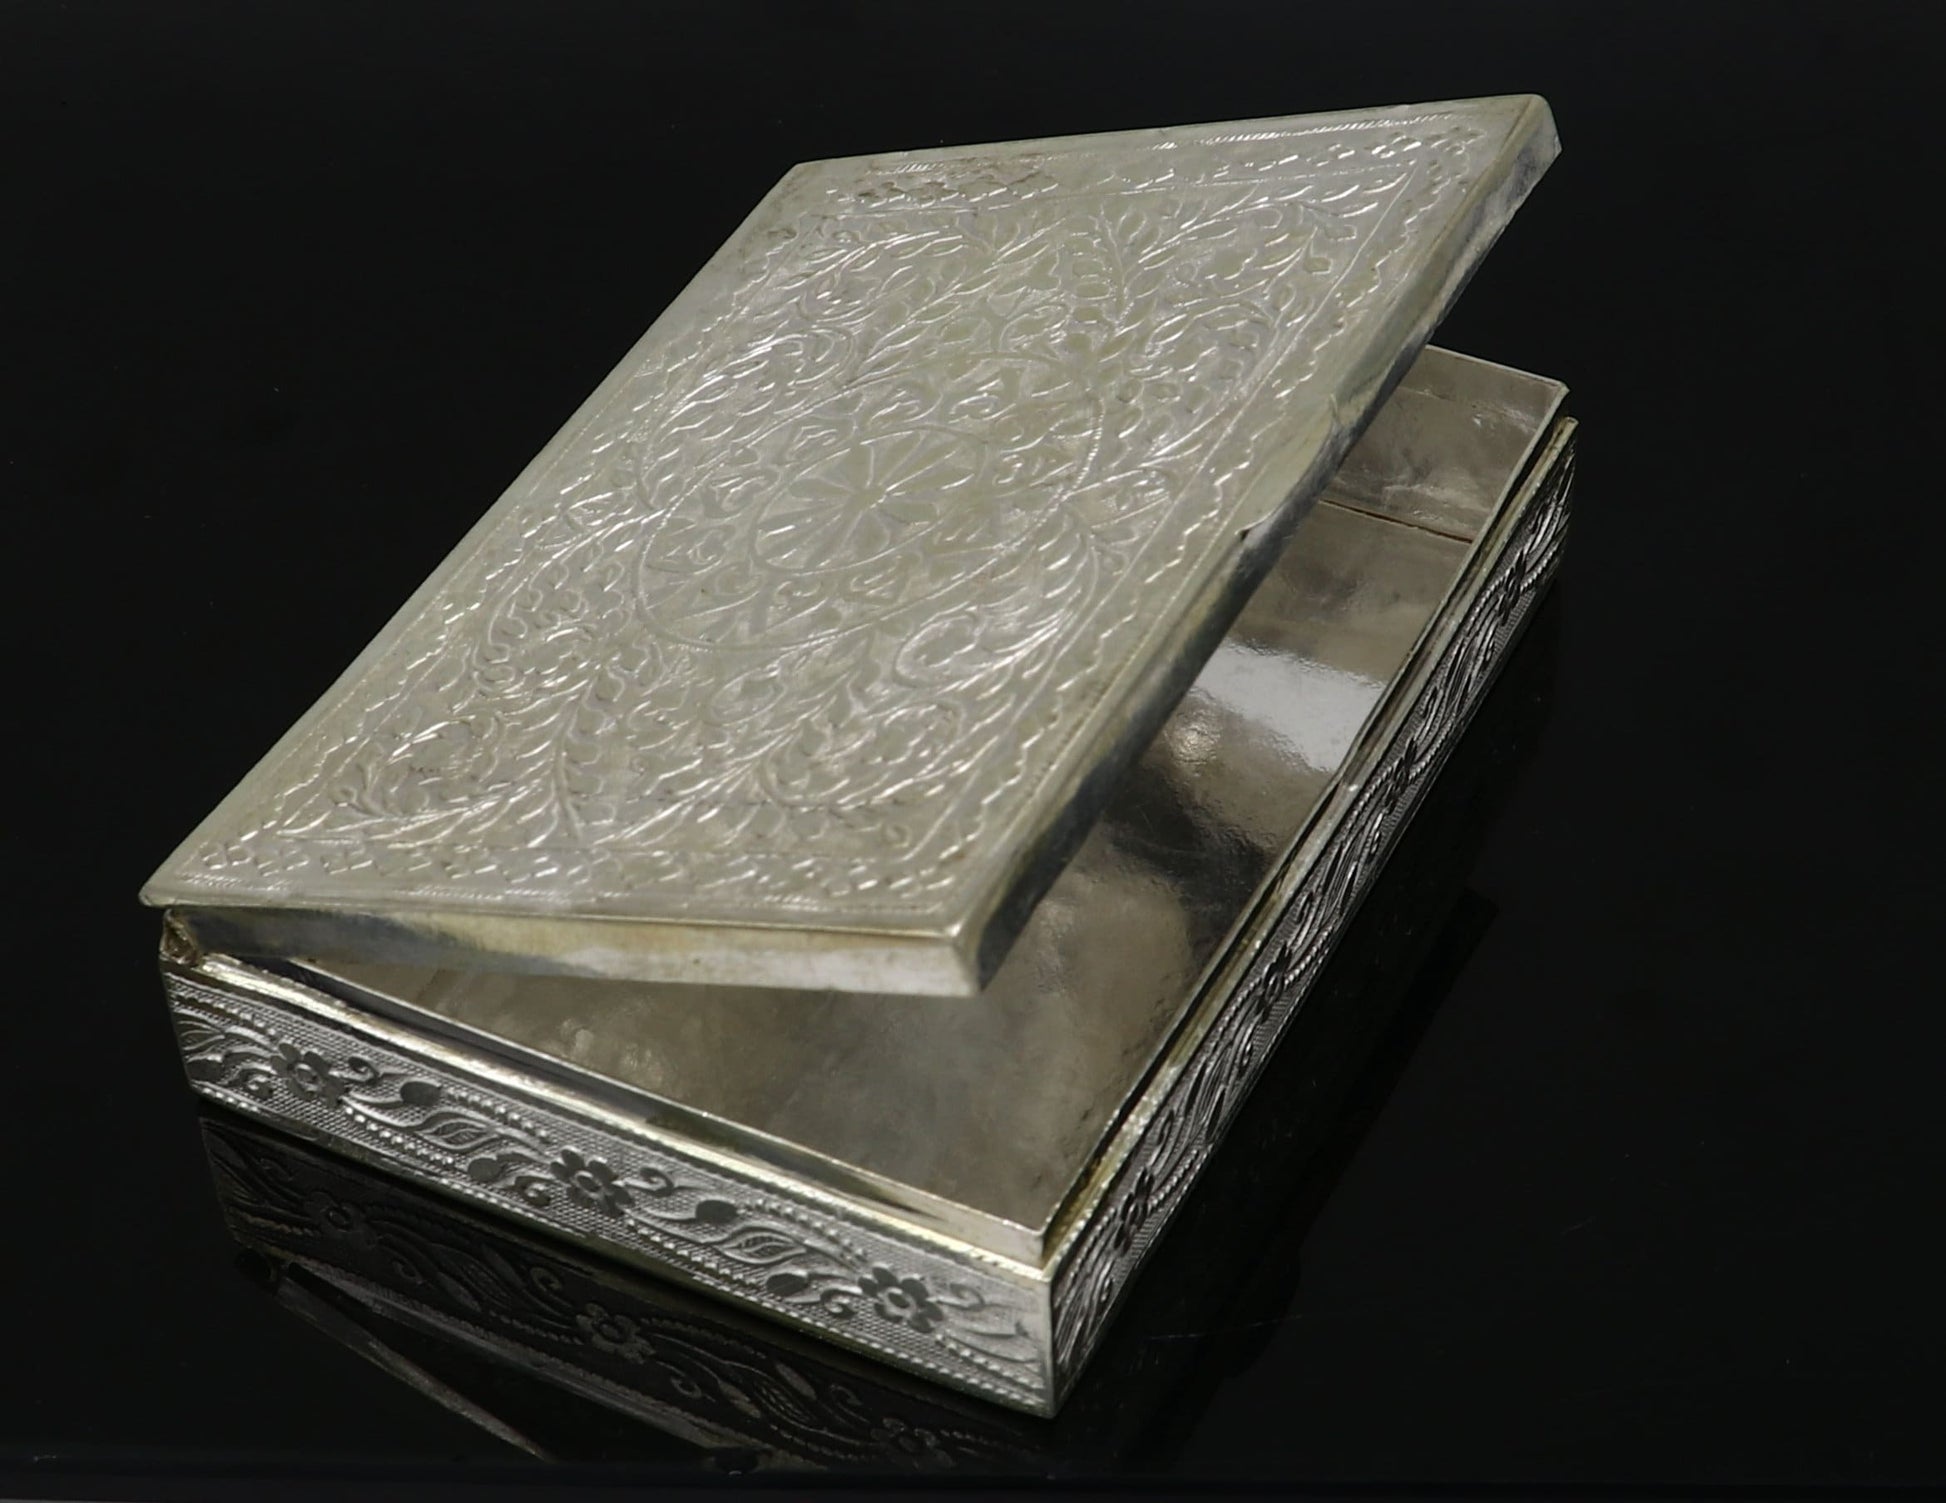 4"x 3" inches 925 sterling silver trinket box casket box container cigar box, sanduk/tijori brides jewelry box collectible pieces stb786 - TRIBAL ORNAMENTS